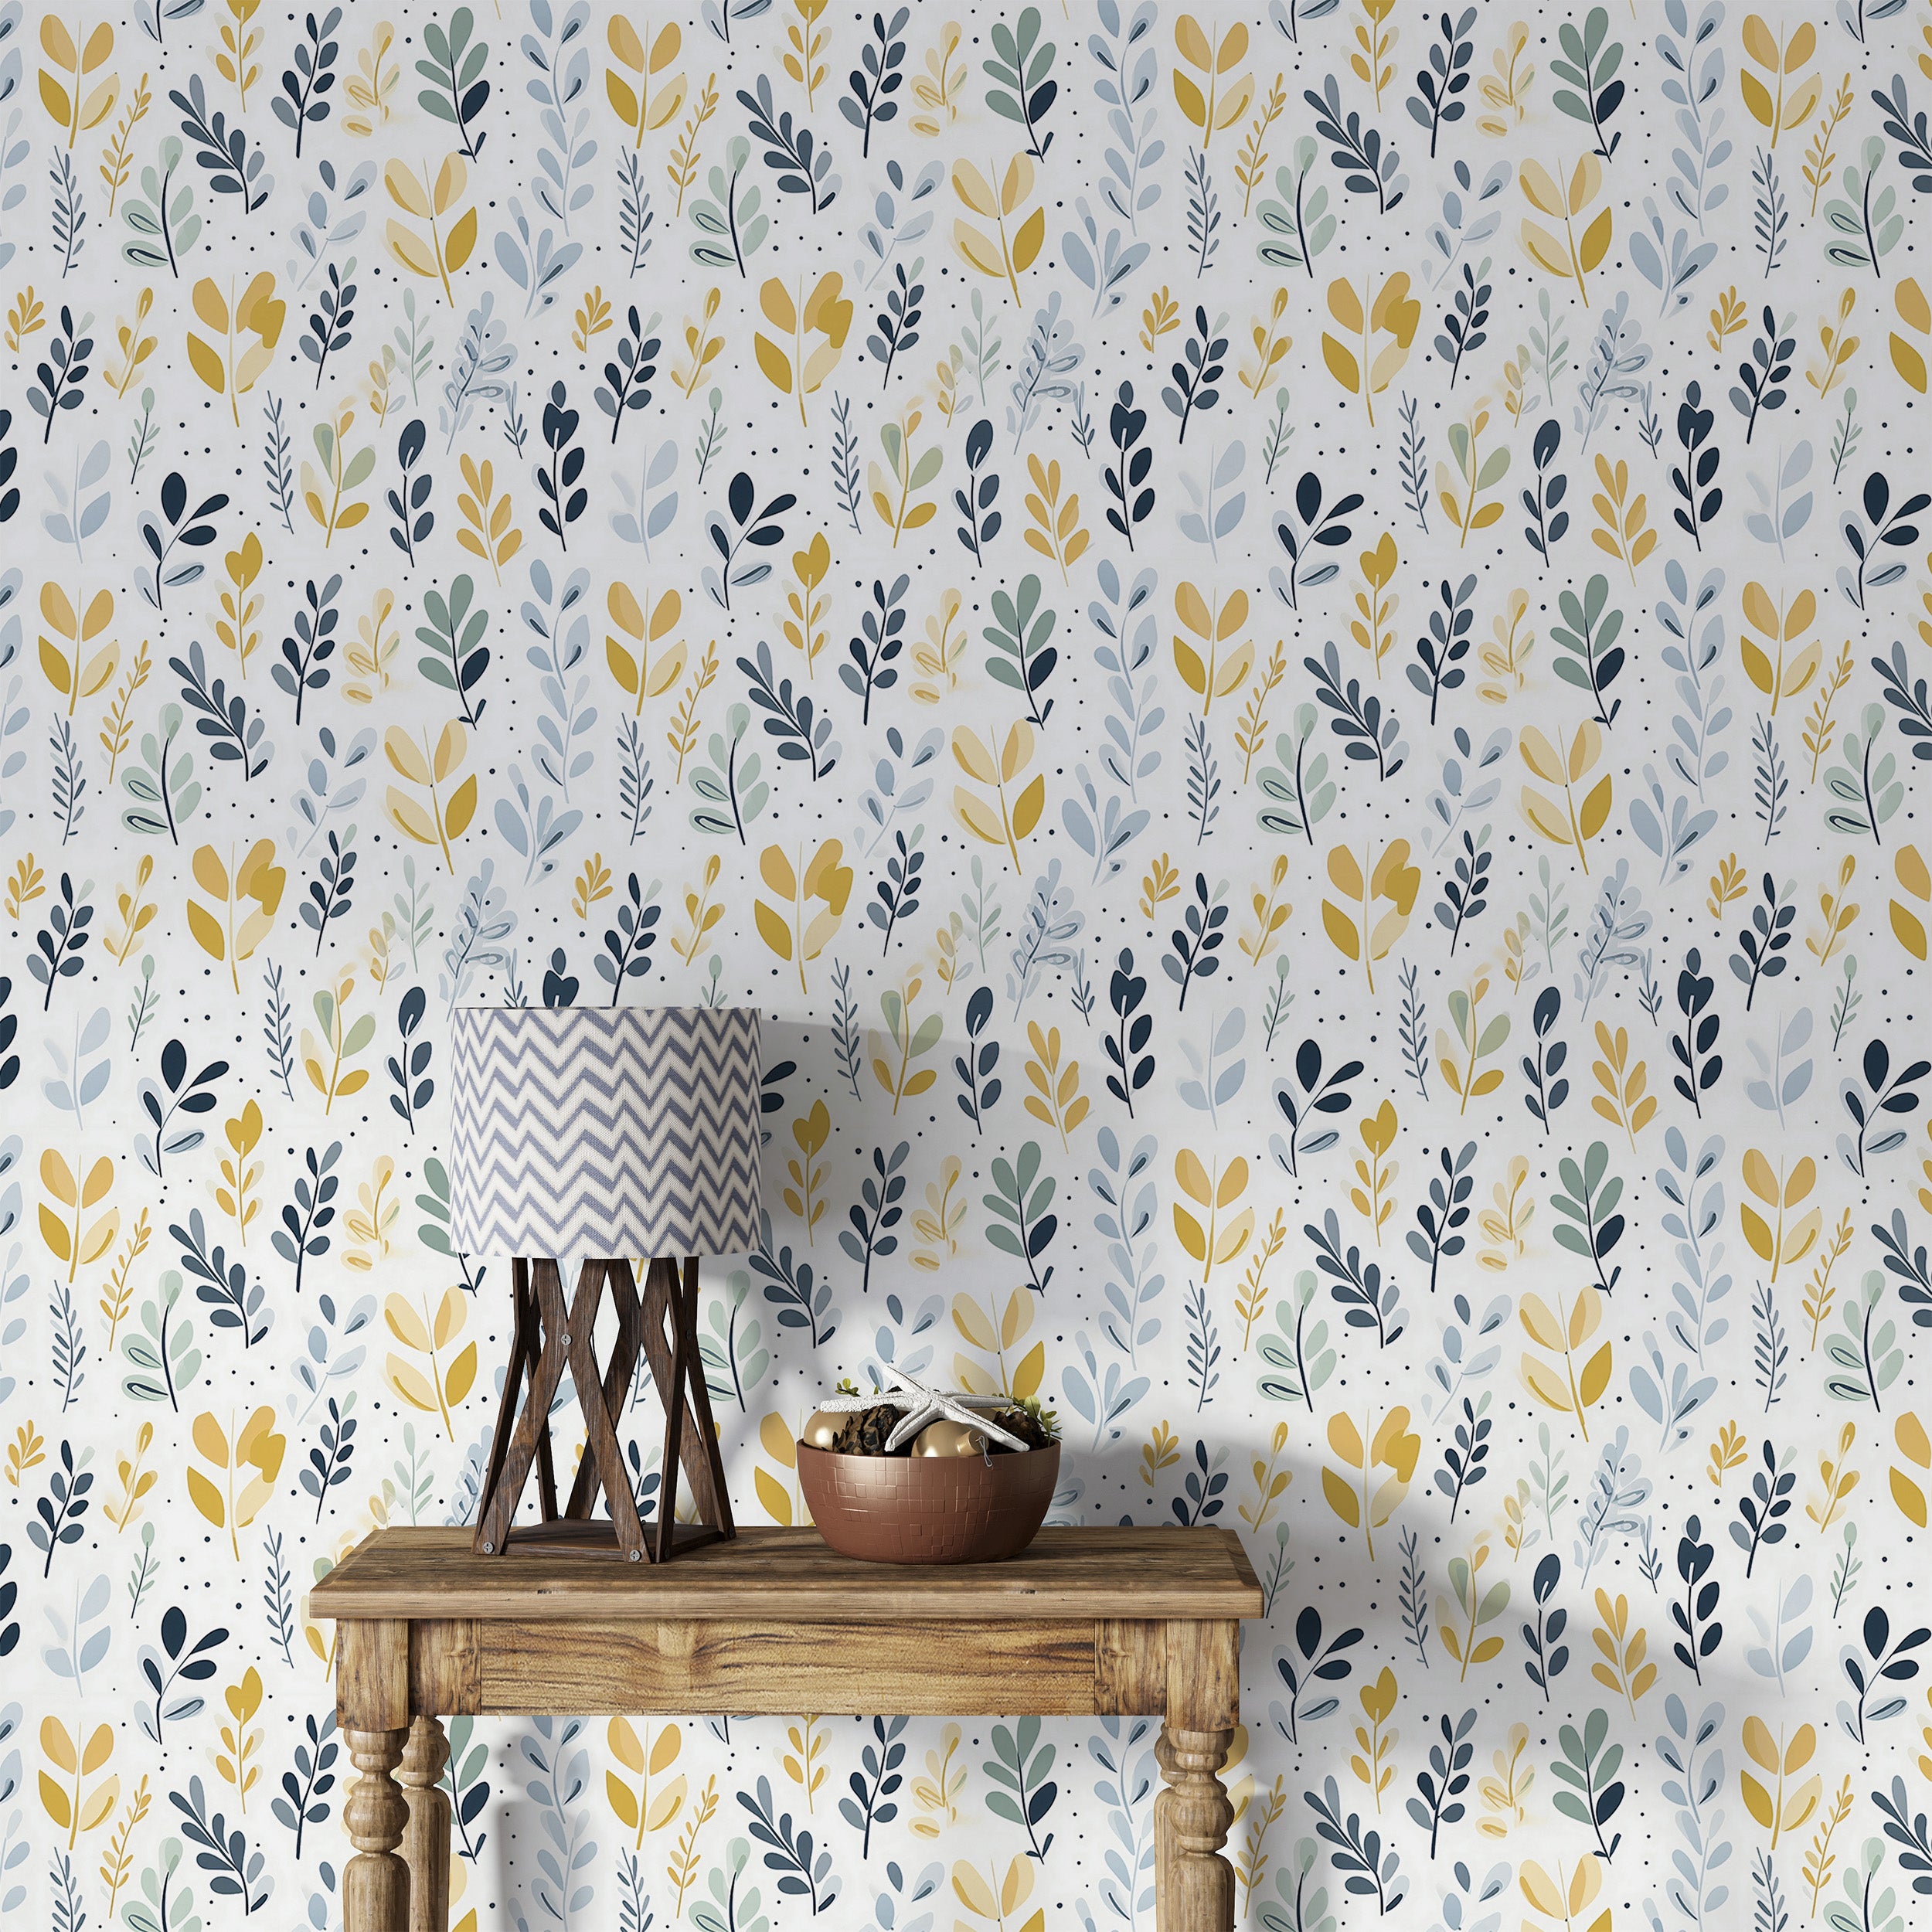 Leaves Pattern Wallpaper in Room Setting